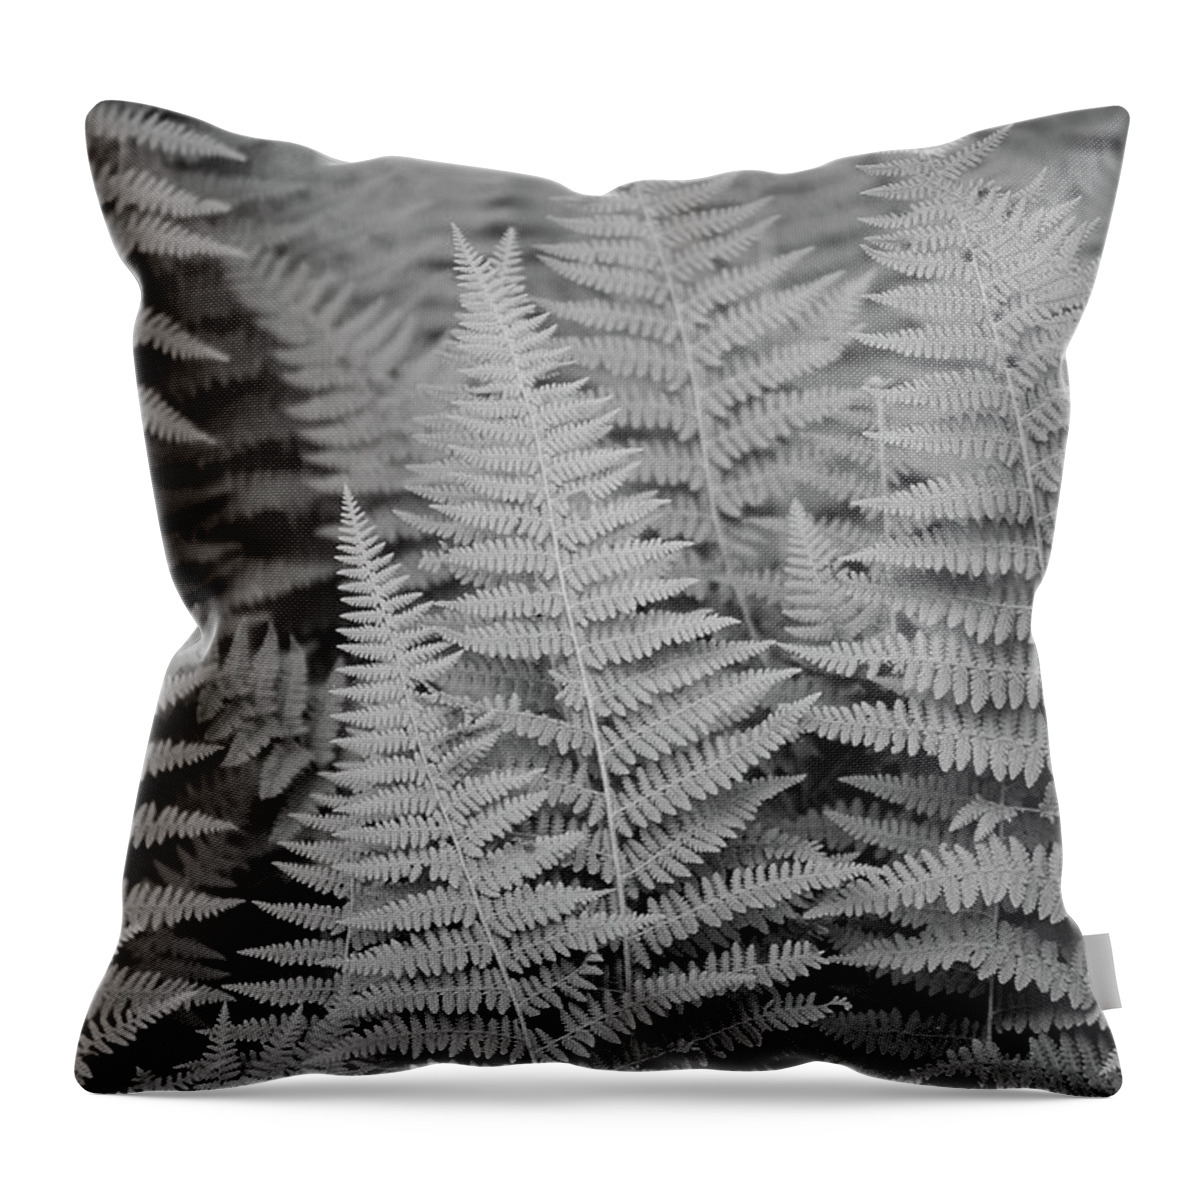 Ferns Throw Pillow featuring the photograph Ferns, Roadside by Amanda Rimmer